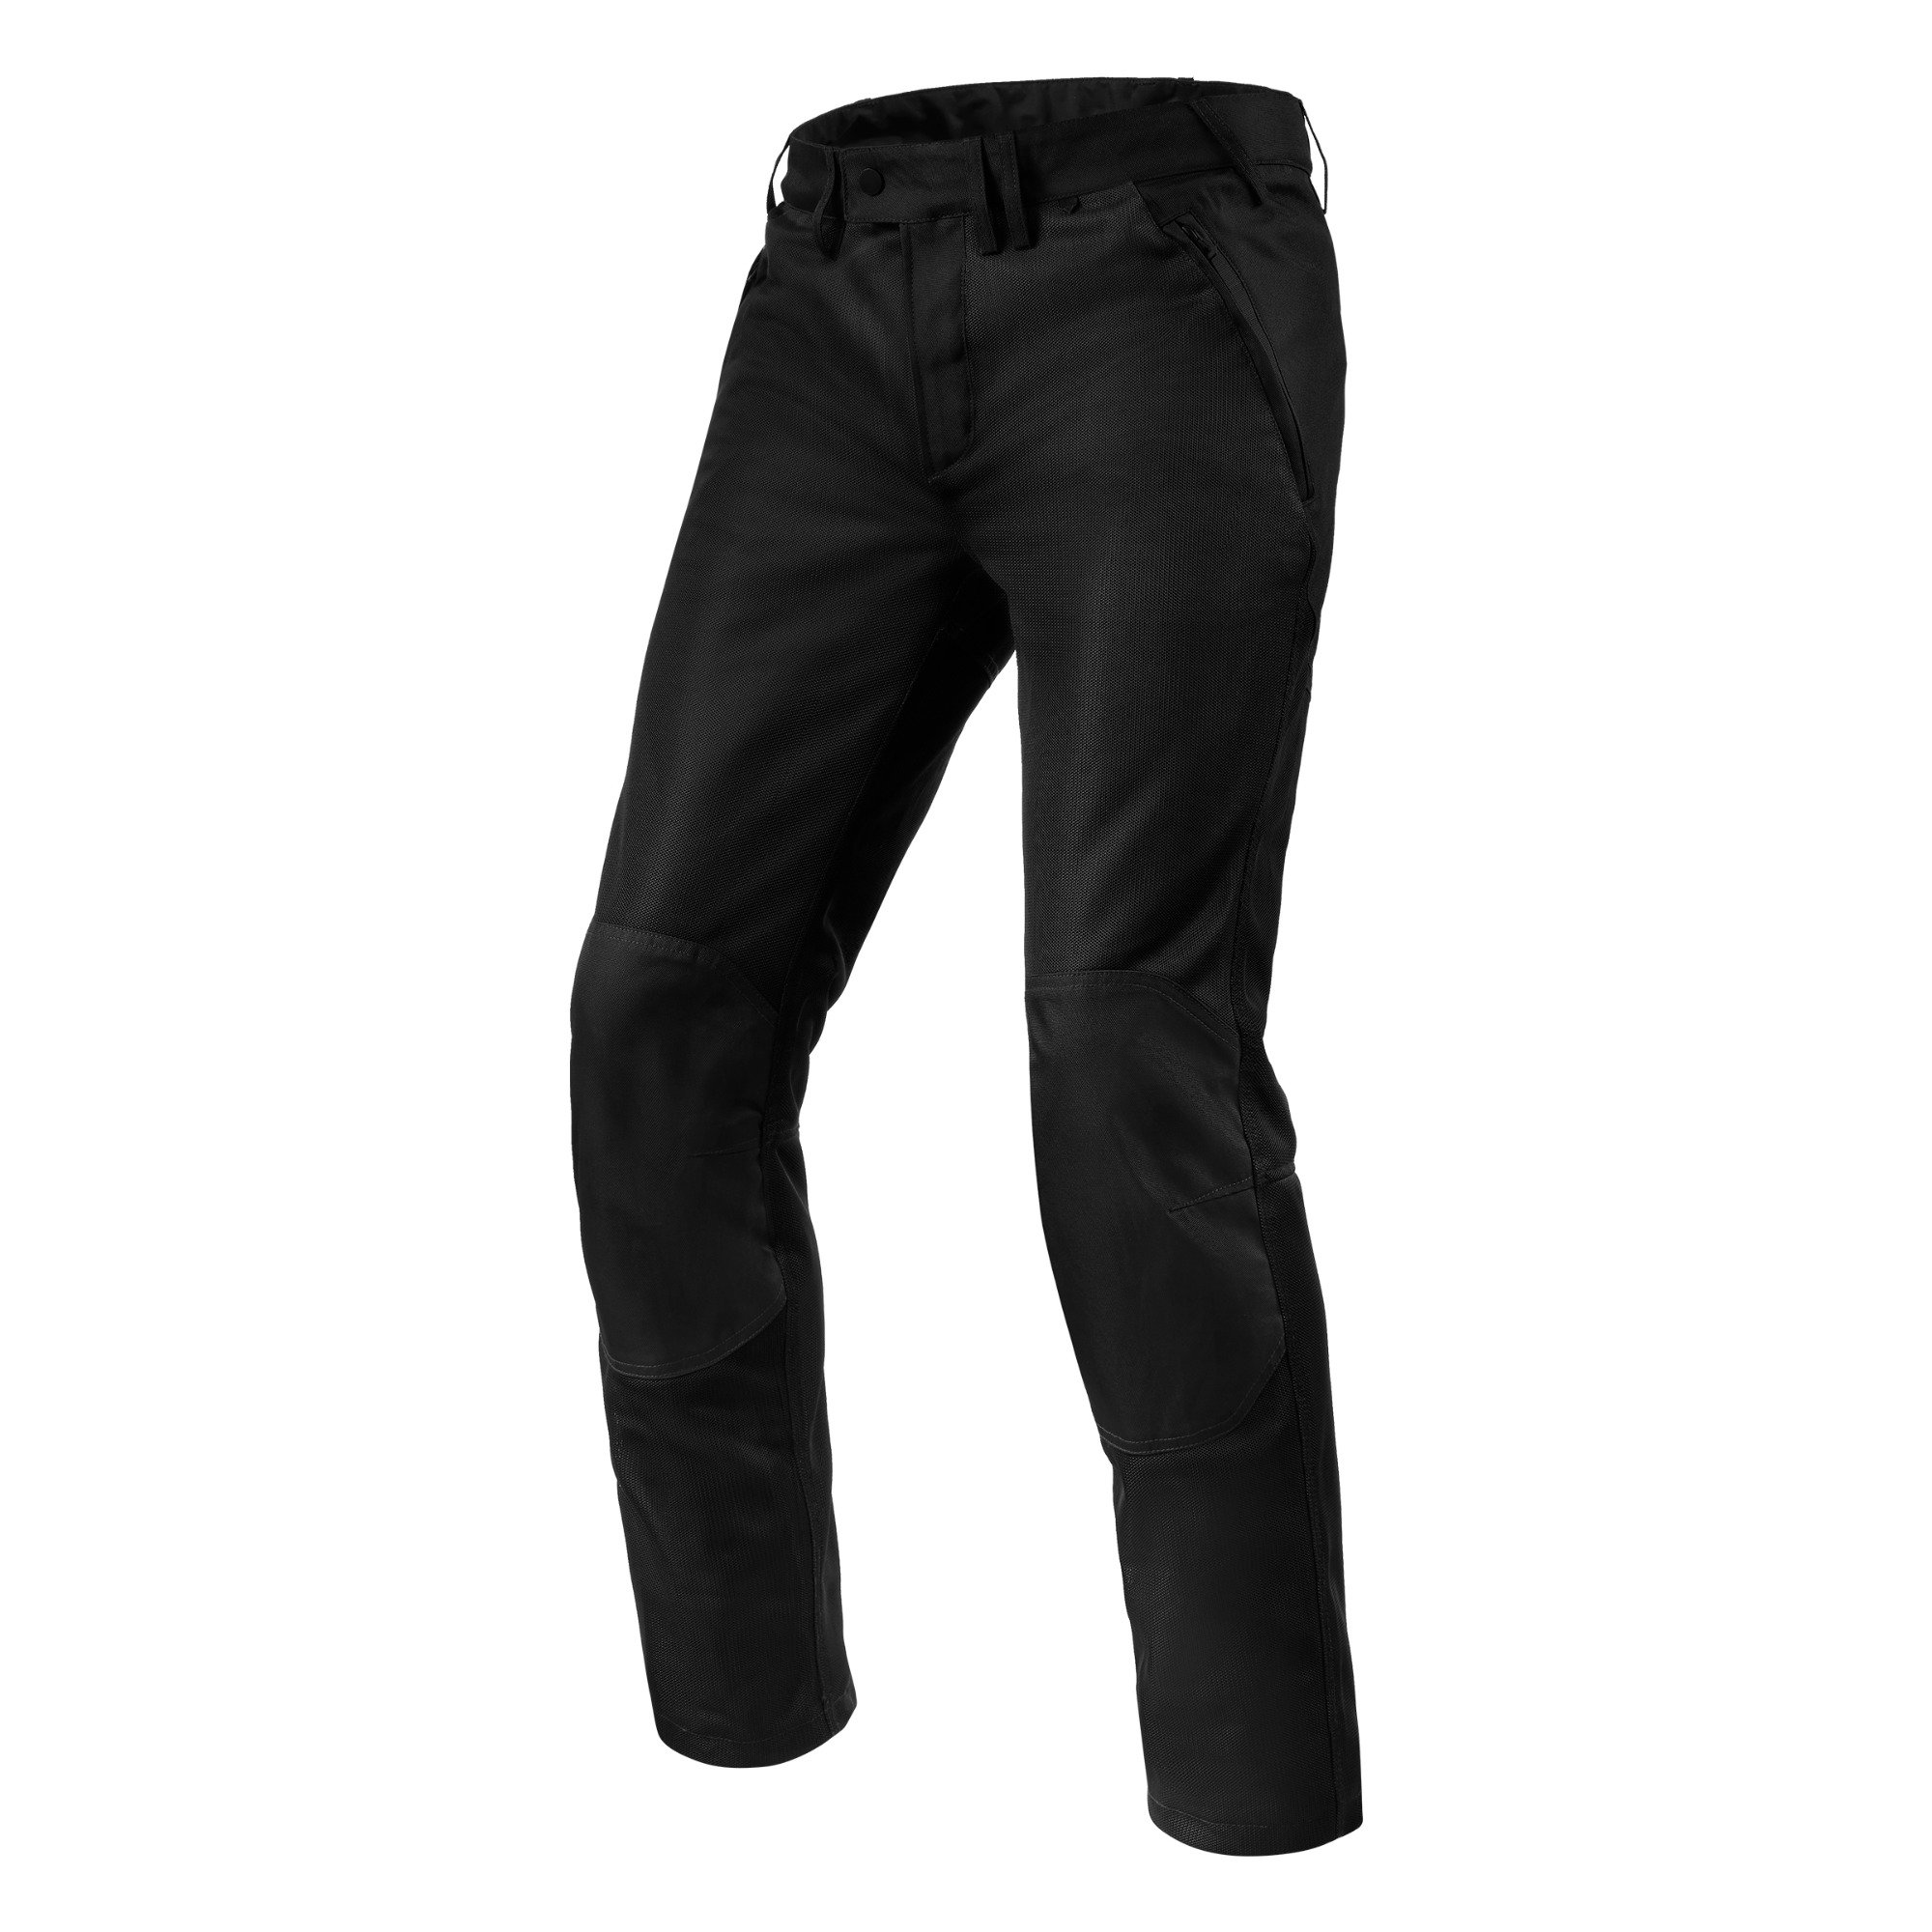 Image of REV'IT! Pants Eclipse 2 Black Standard Motorcycle Pants Size 2XL ID 8700001368544